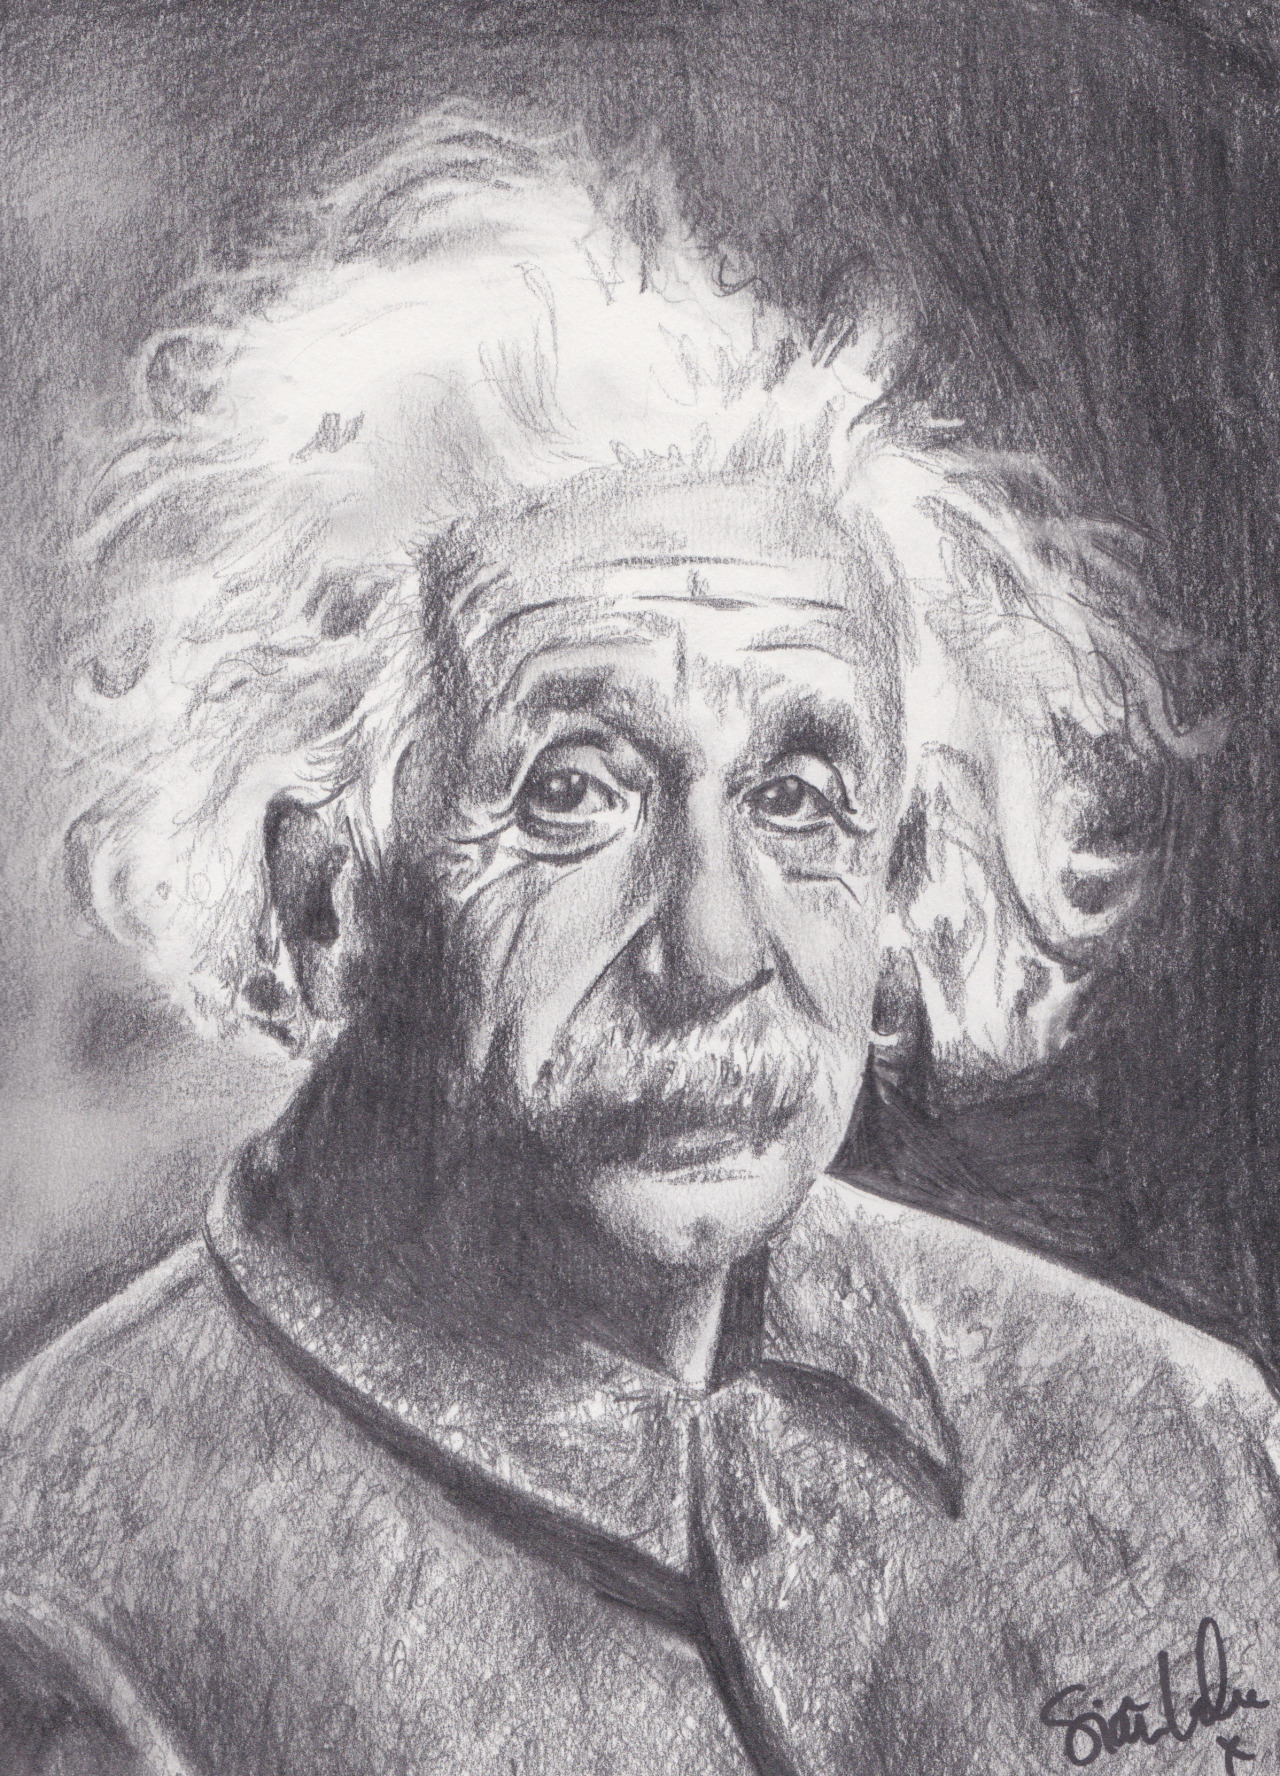 A pencil portrait of Einstein. My art blog is www.sianlakeart.tumblr.com Thank you!